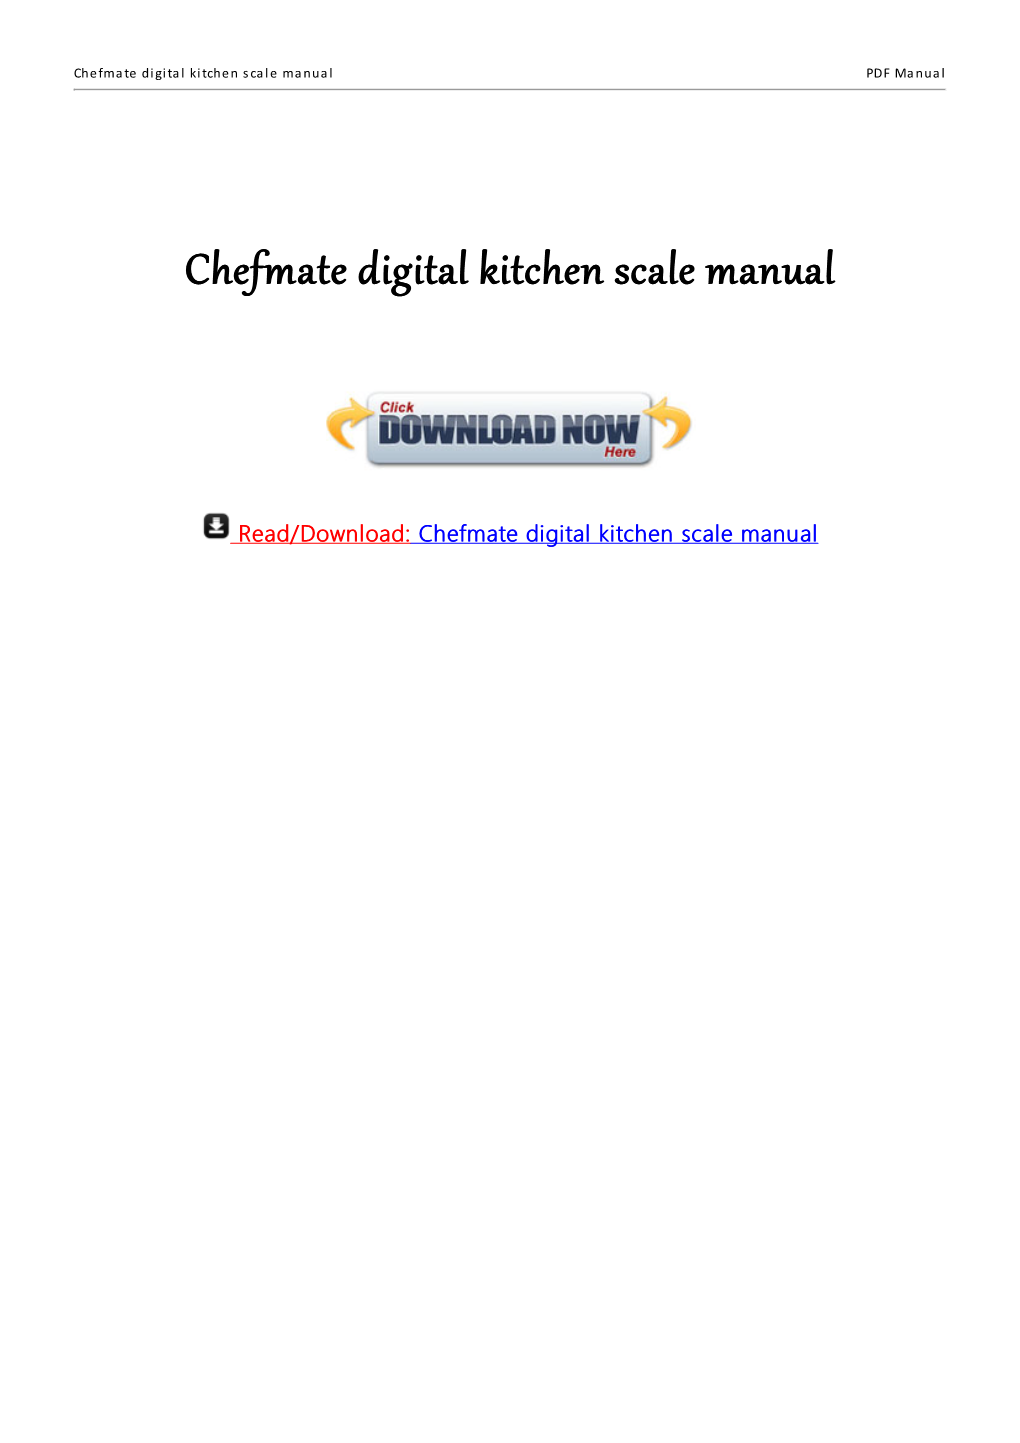 Chefmate Digital Kitchen Scale Manual PDF Manual